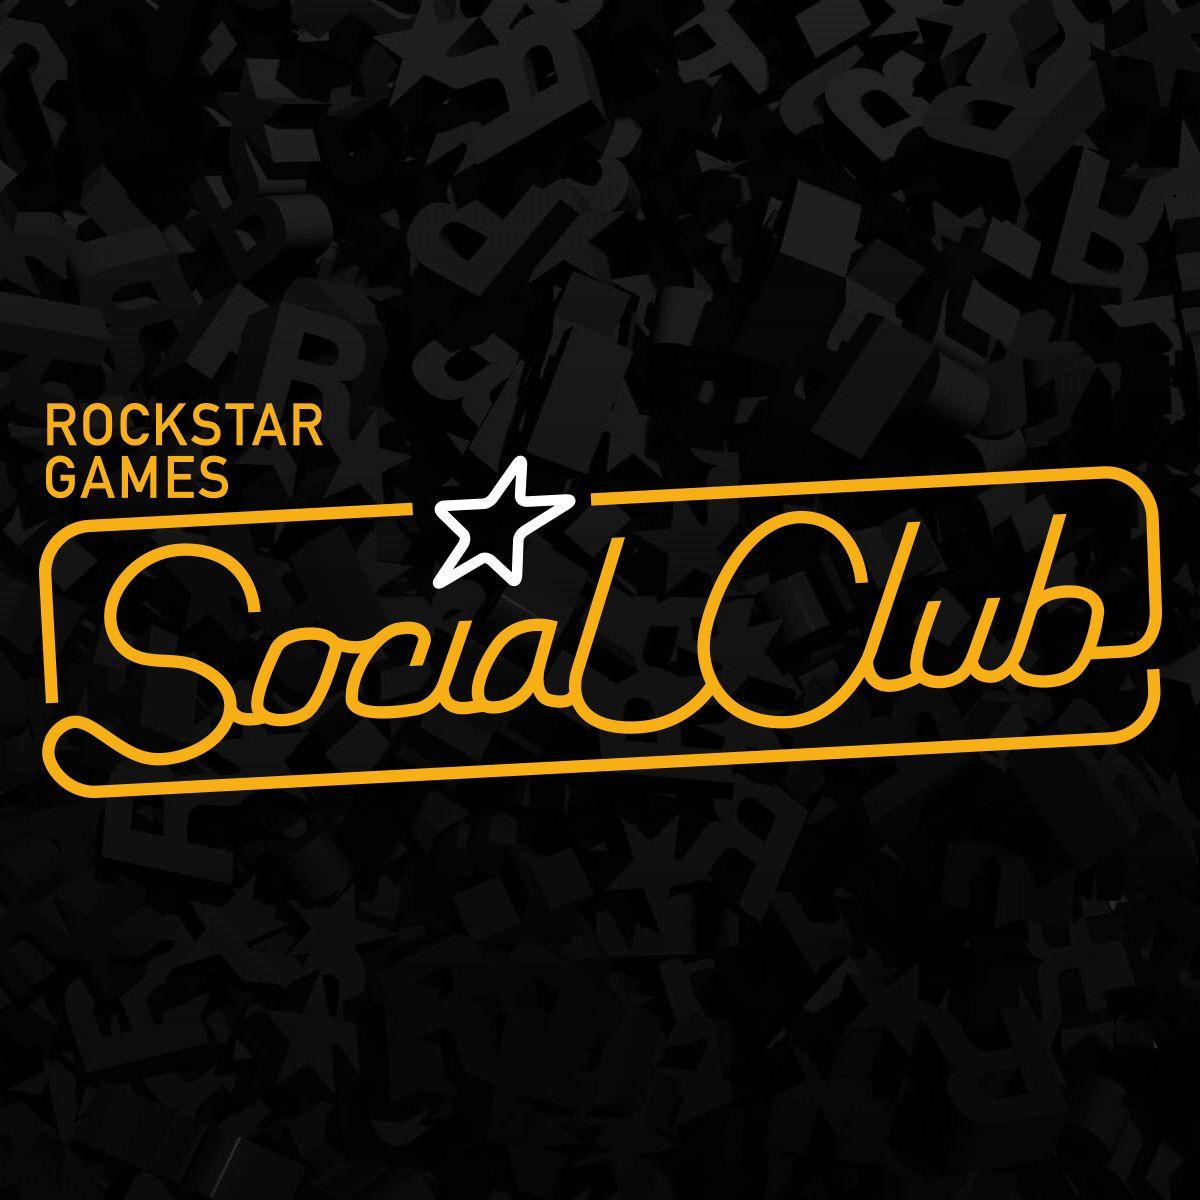 Social Club Logo - Emblem Editor : Tutorial - Rockstar Games Social Club